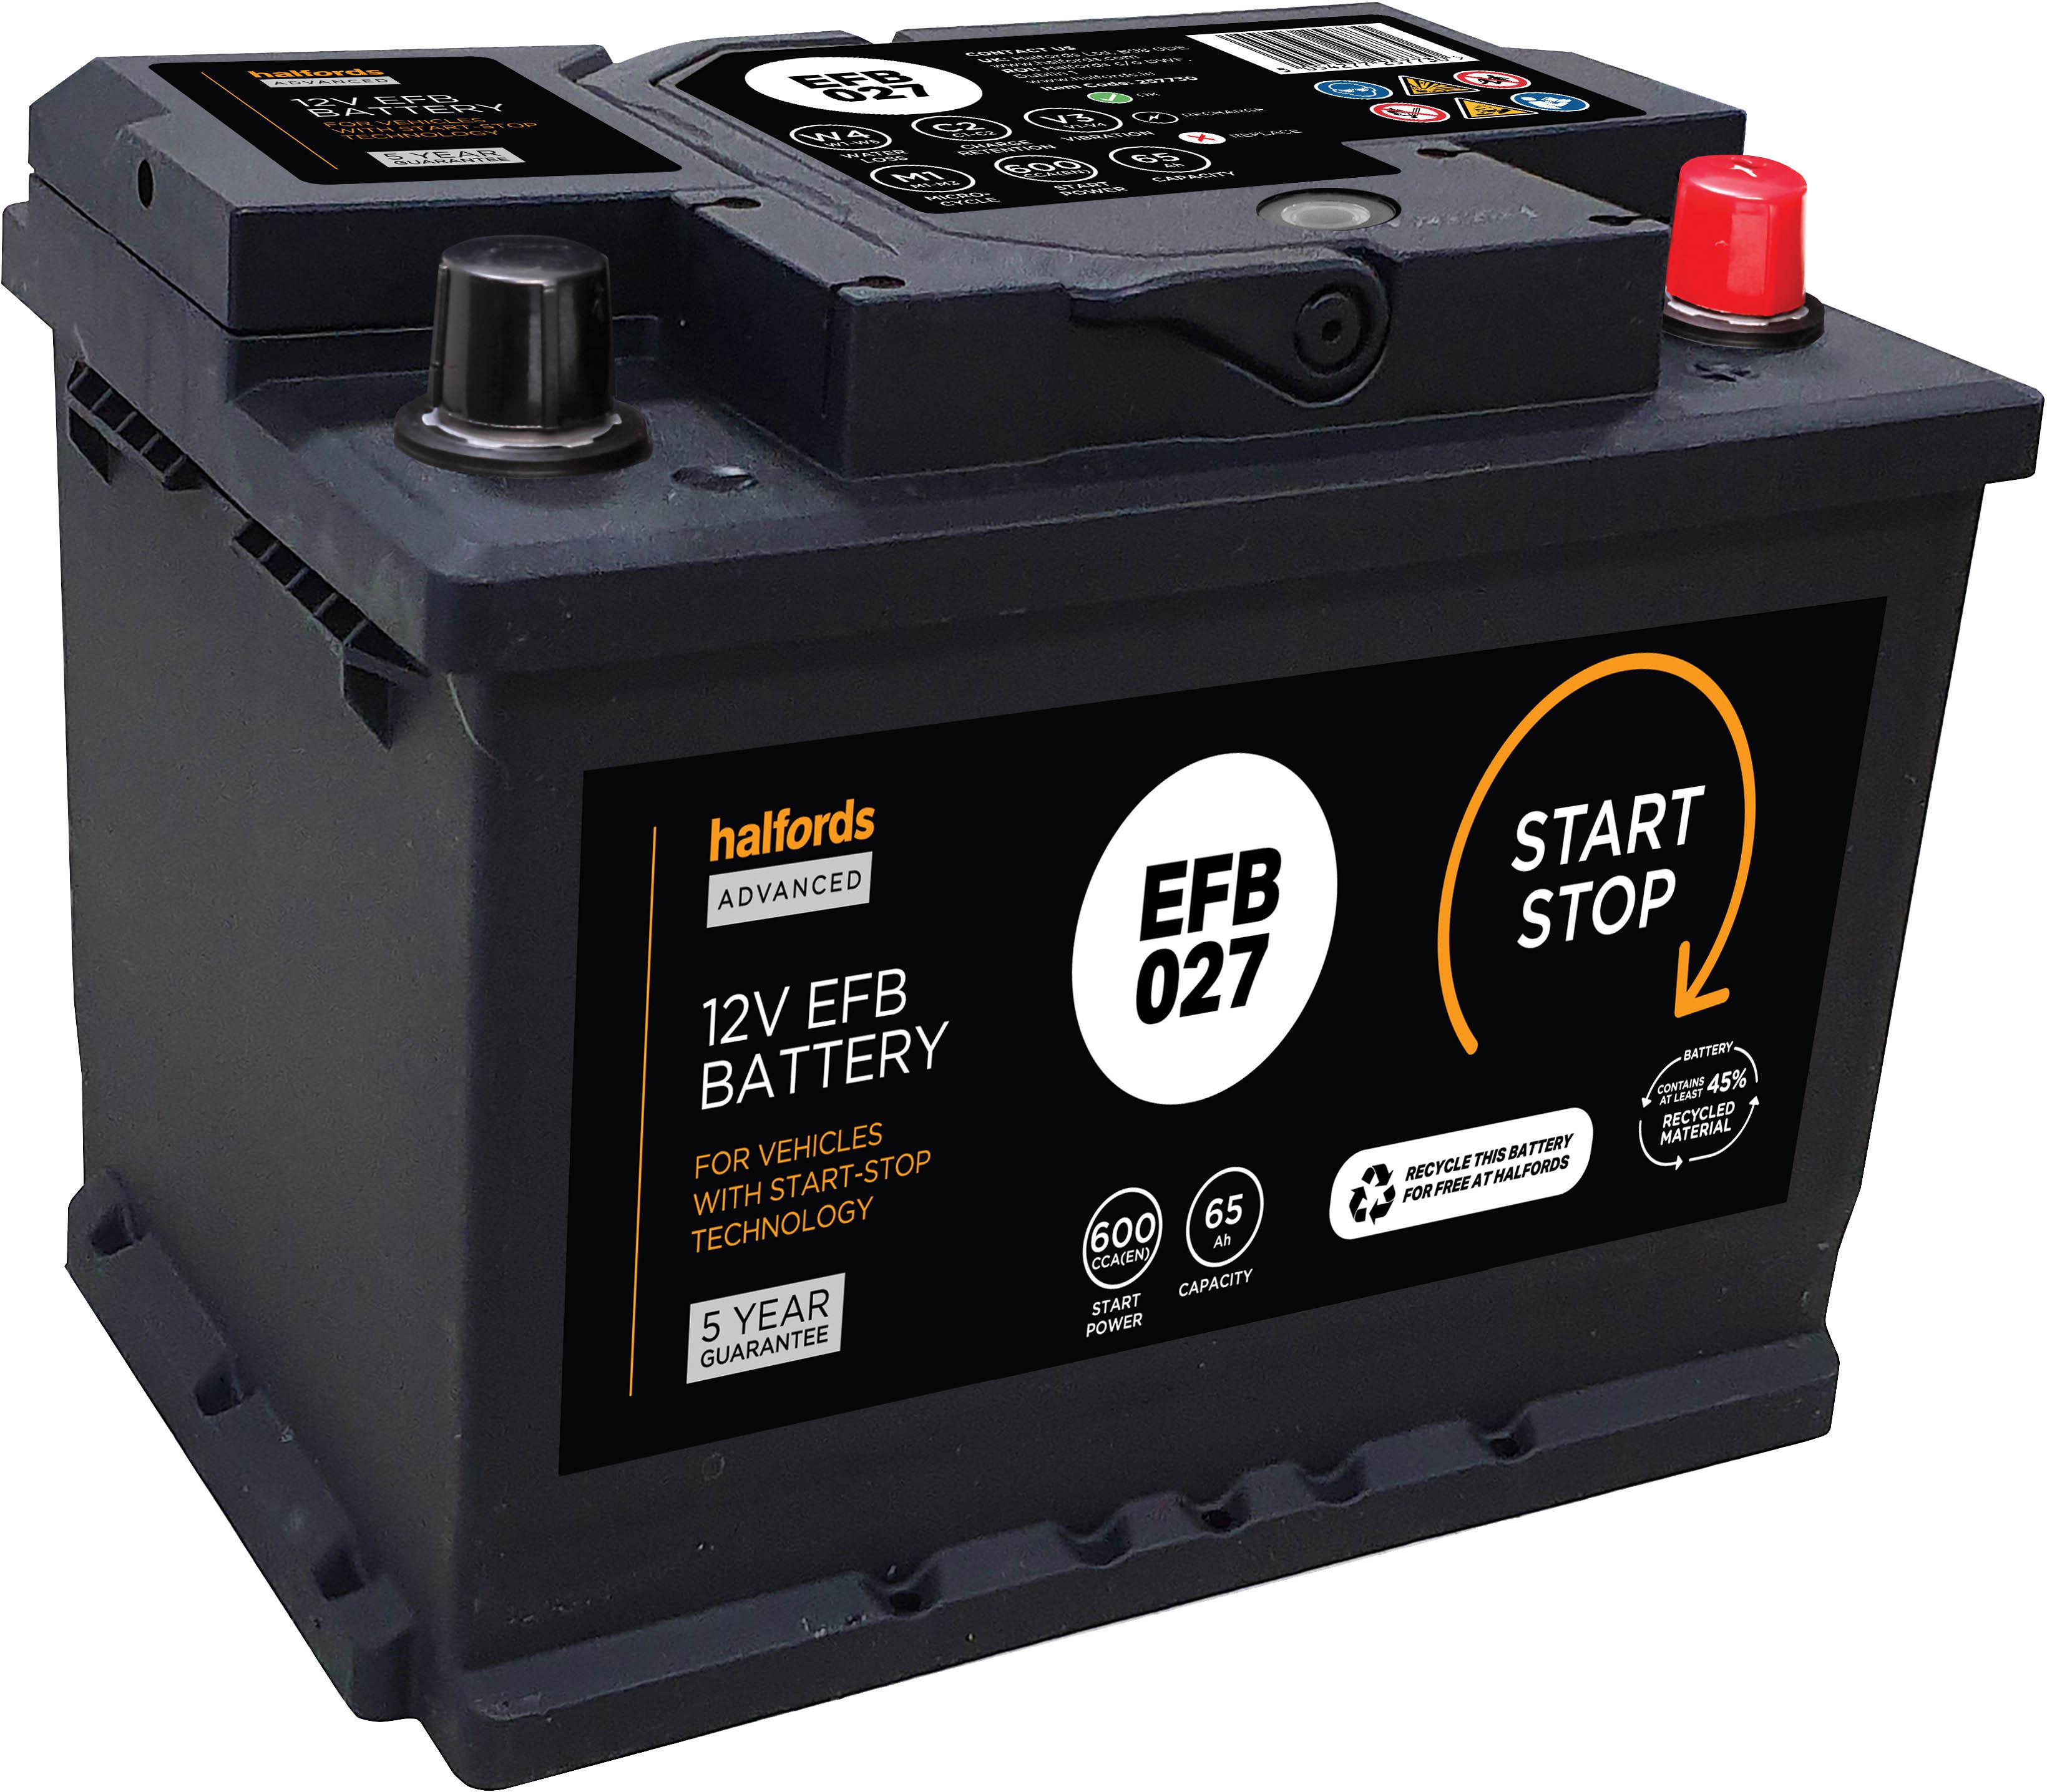 Halfords Efb013 Start/Stop Efb 12V Car Battery 5 Year Guarantee